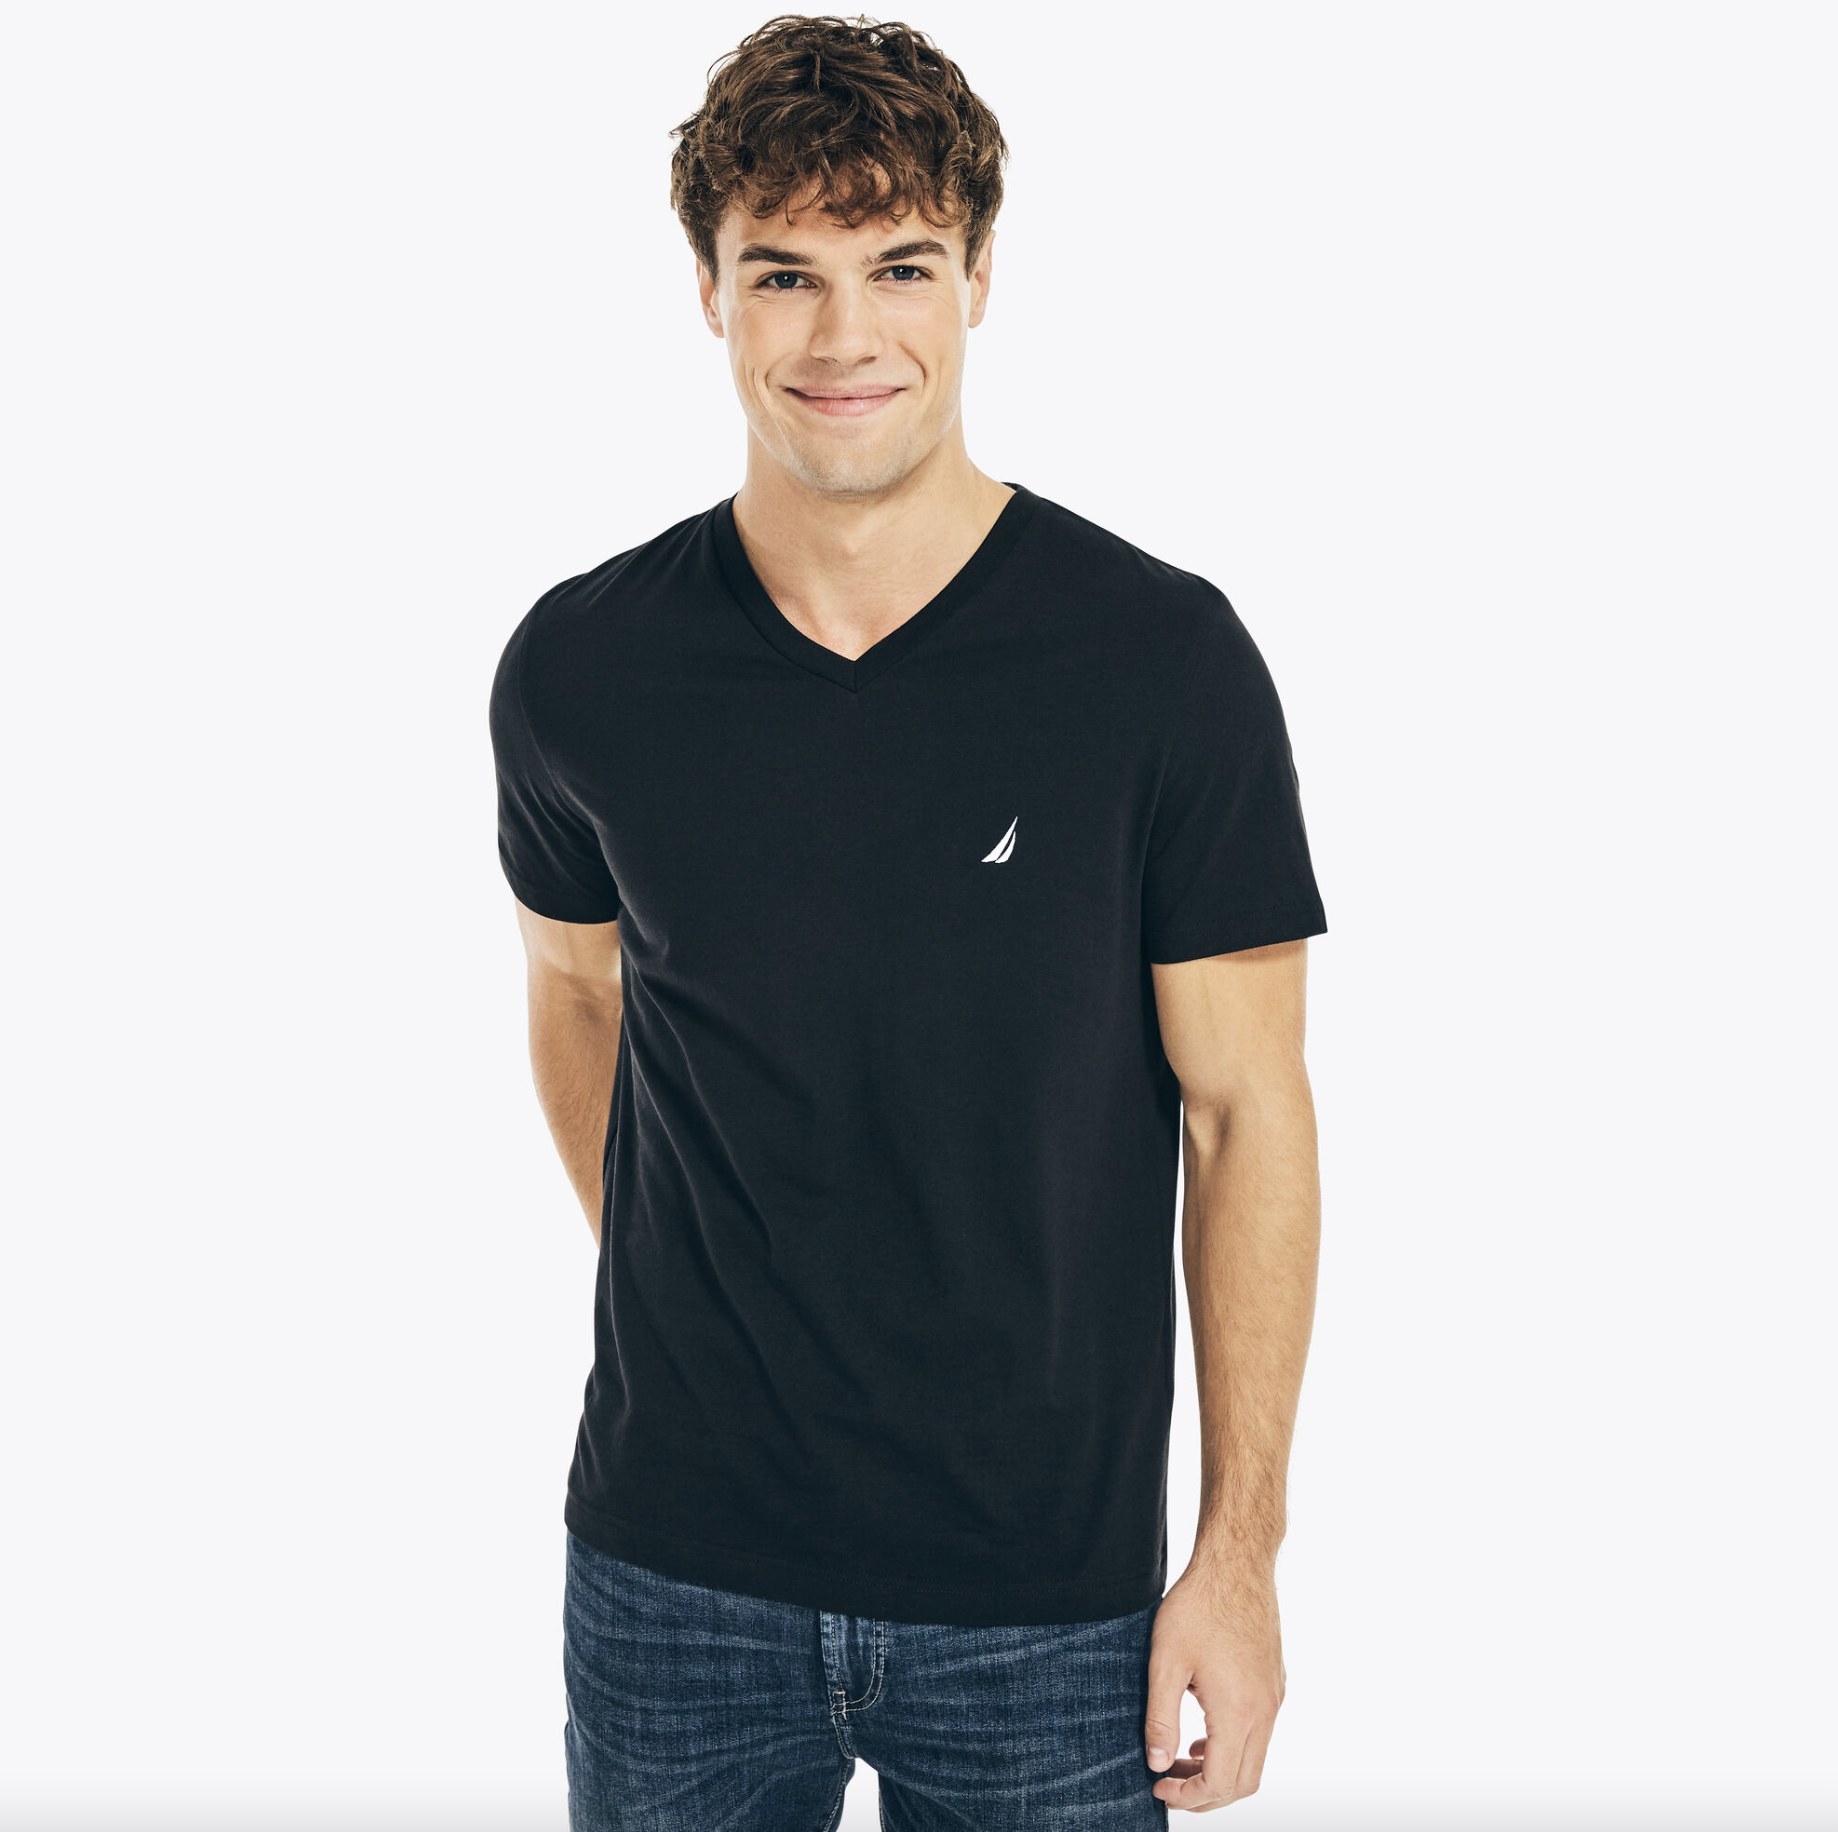 model wearing the V-neck t-shirt in black